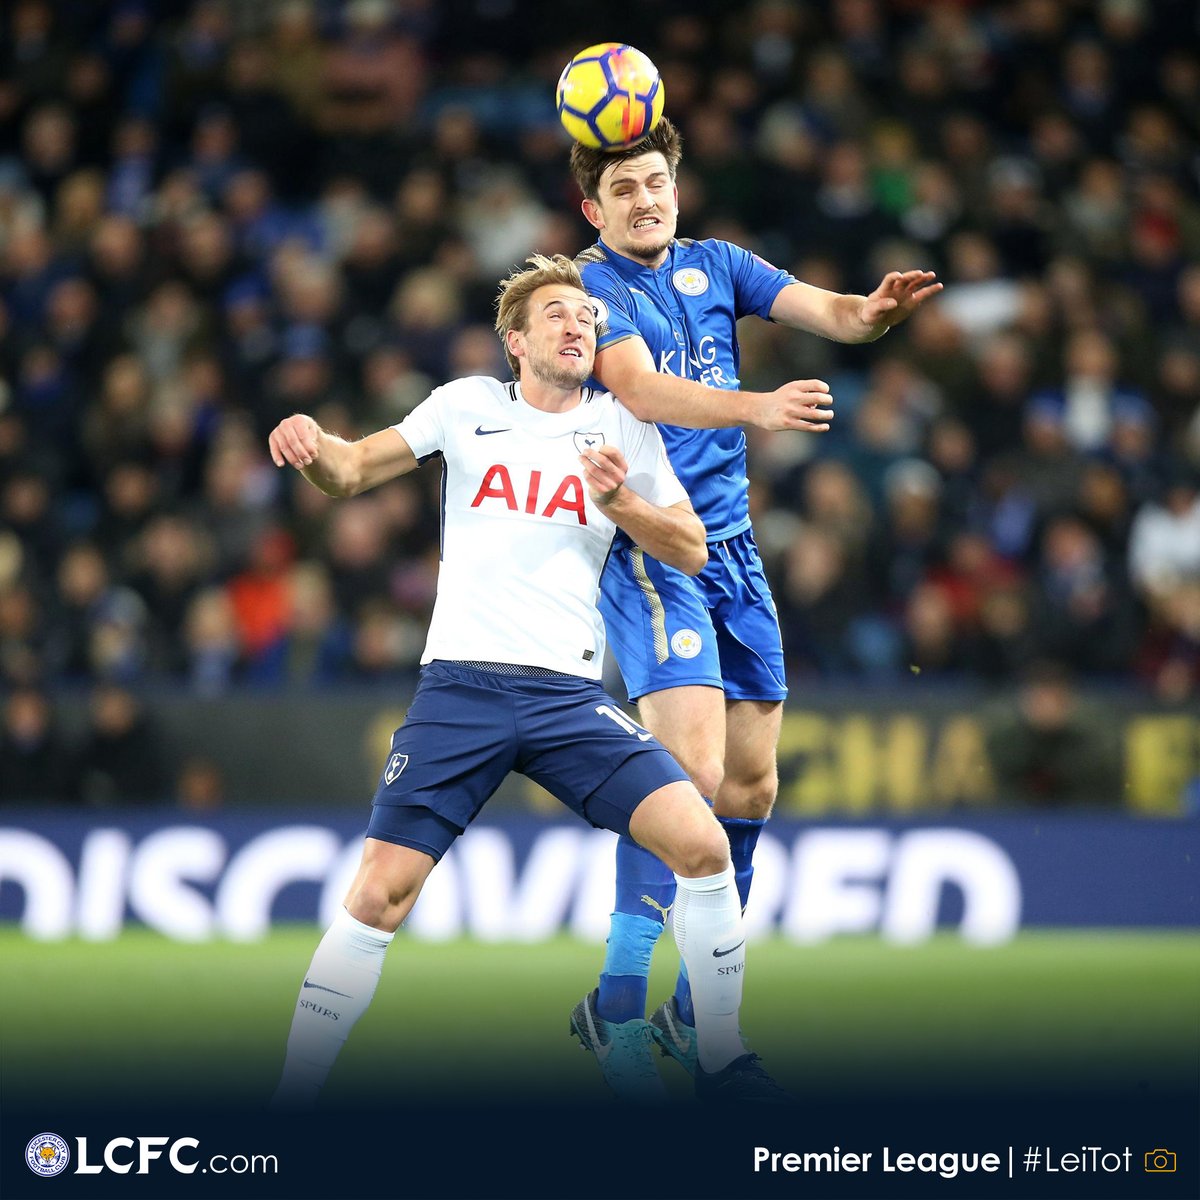 TRỰC TIẾP Leicester City 2-0 Tottenham Hotspur: Mahrez tỏa sáng - Bóng Đá